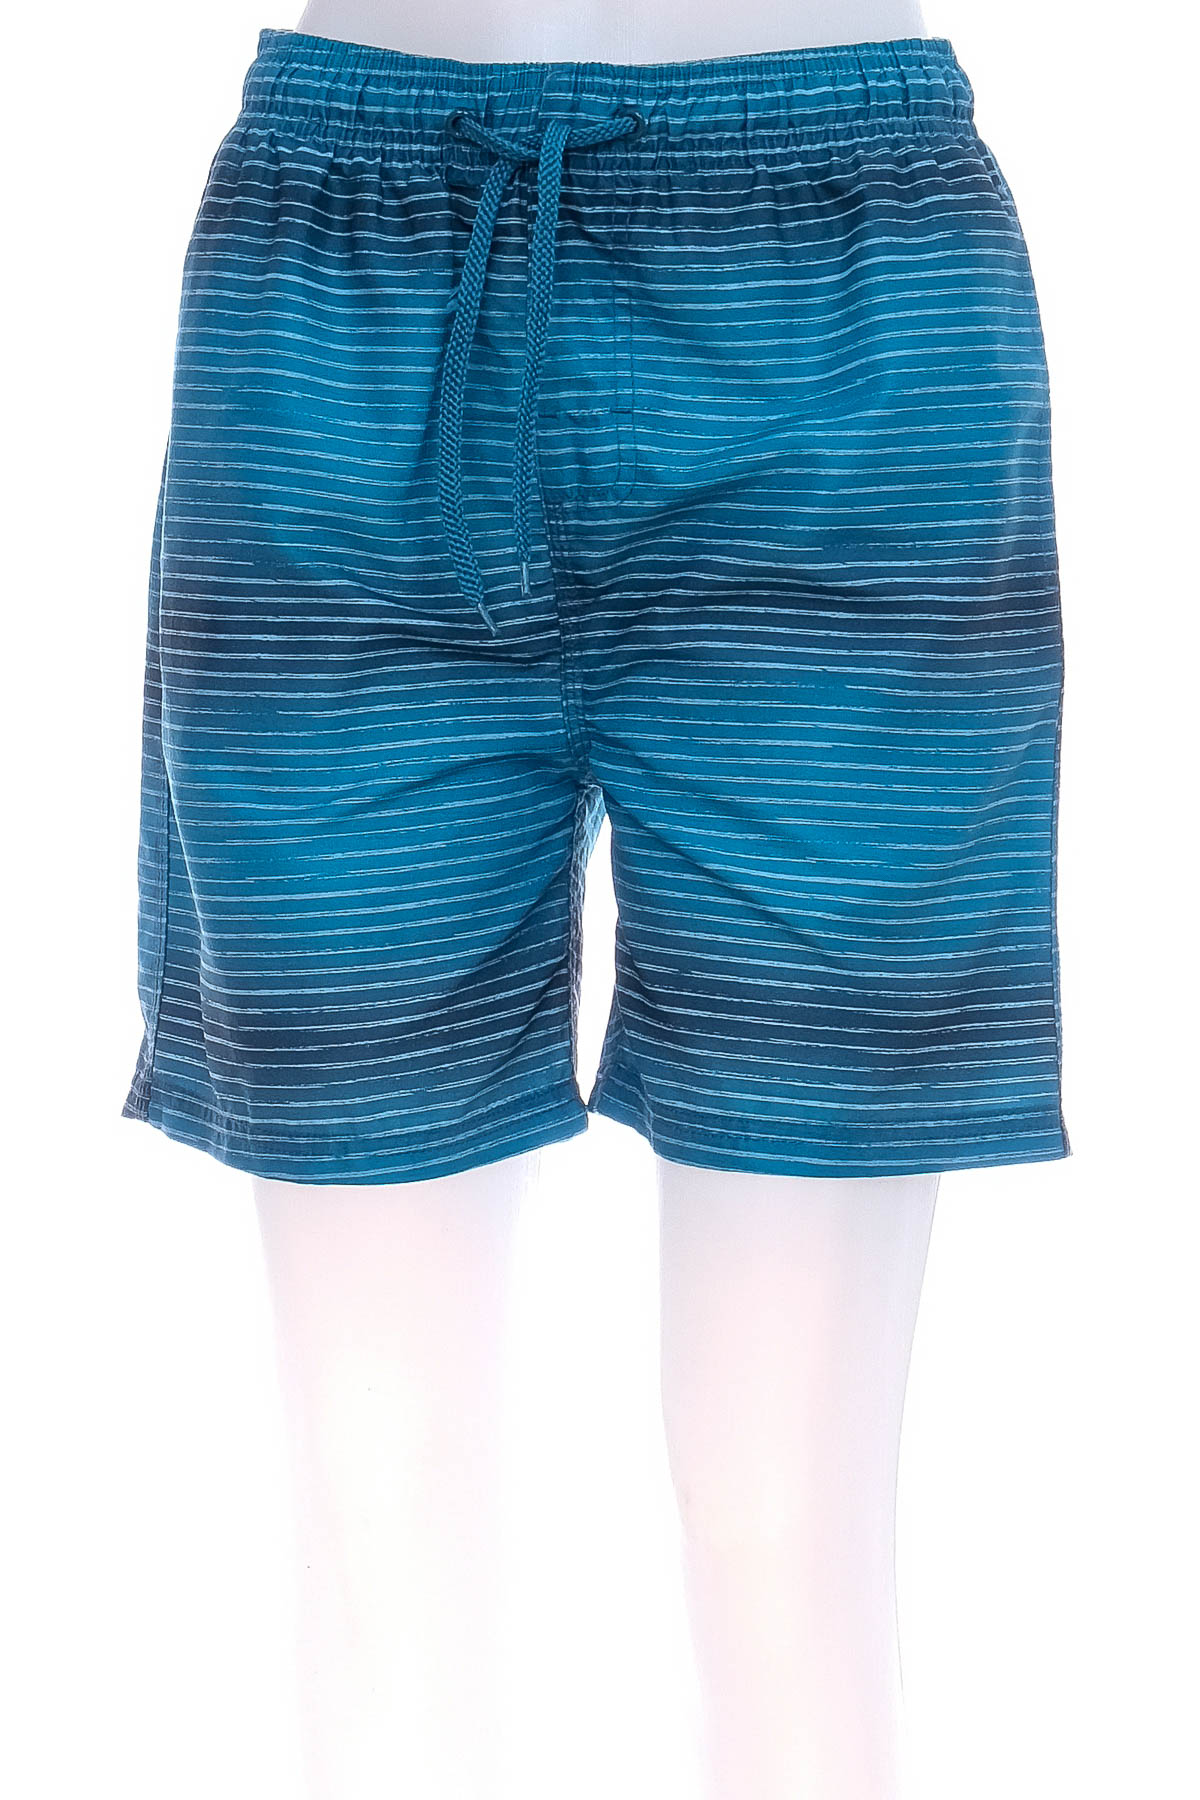 Men's shorts - Kmart - 0